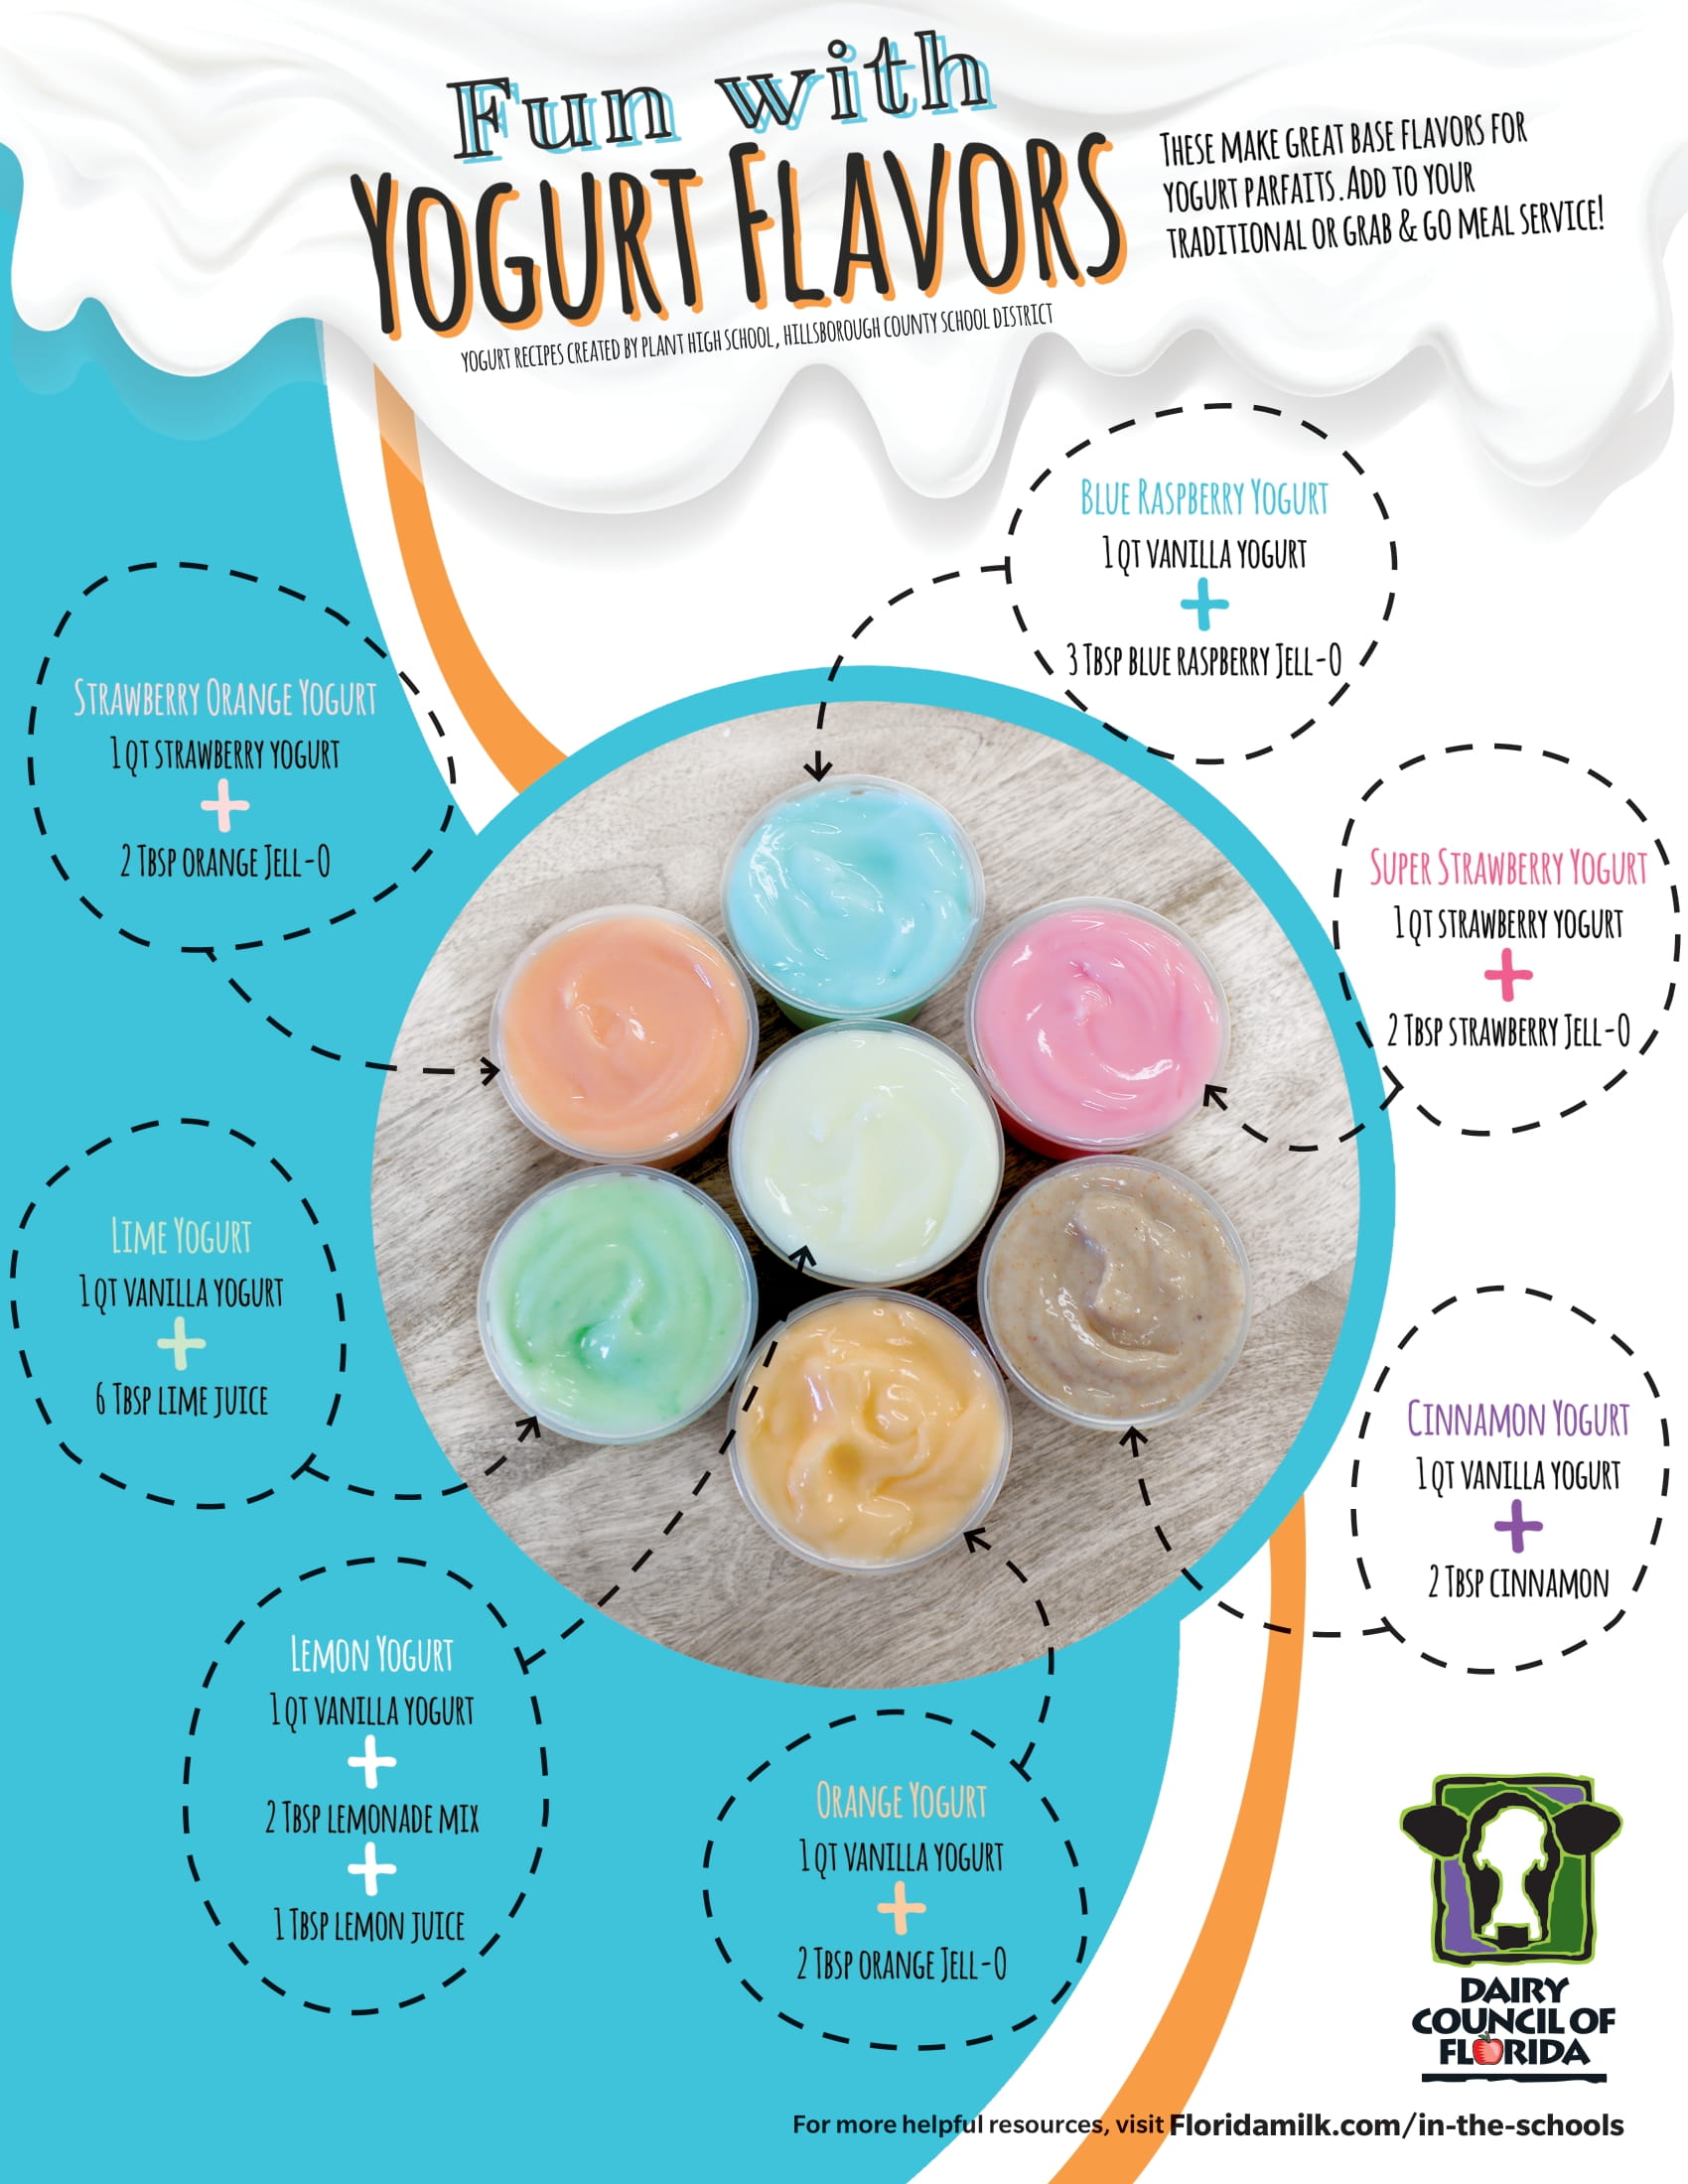 fun yogurt flavors image